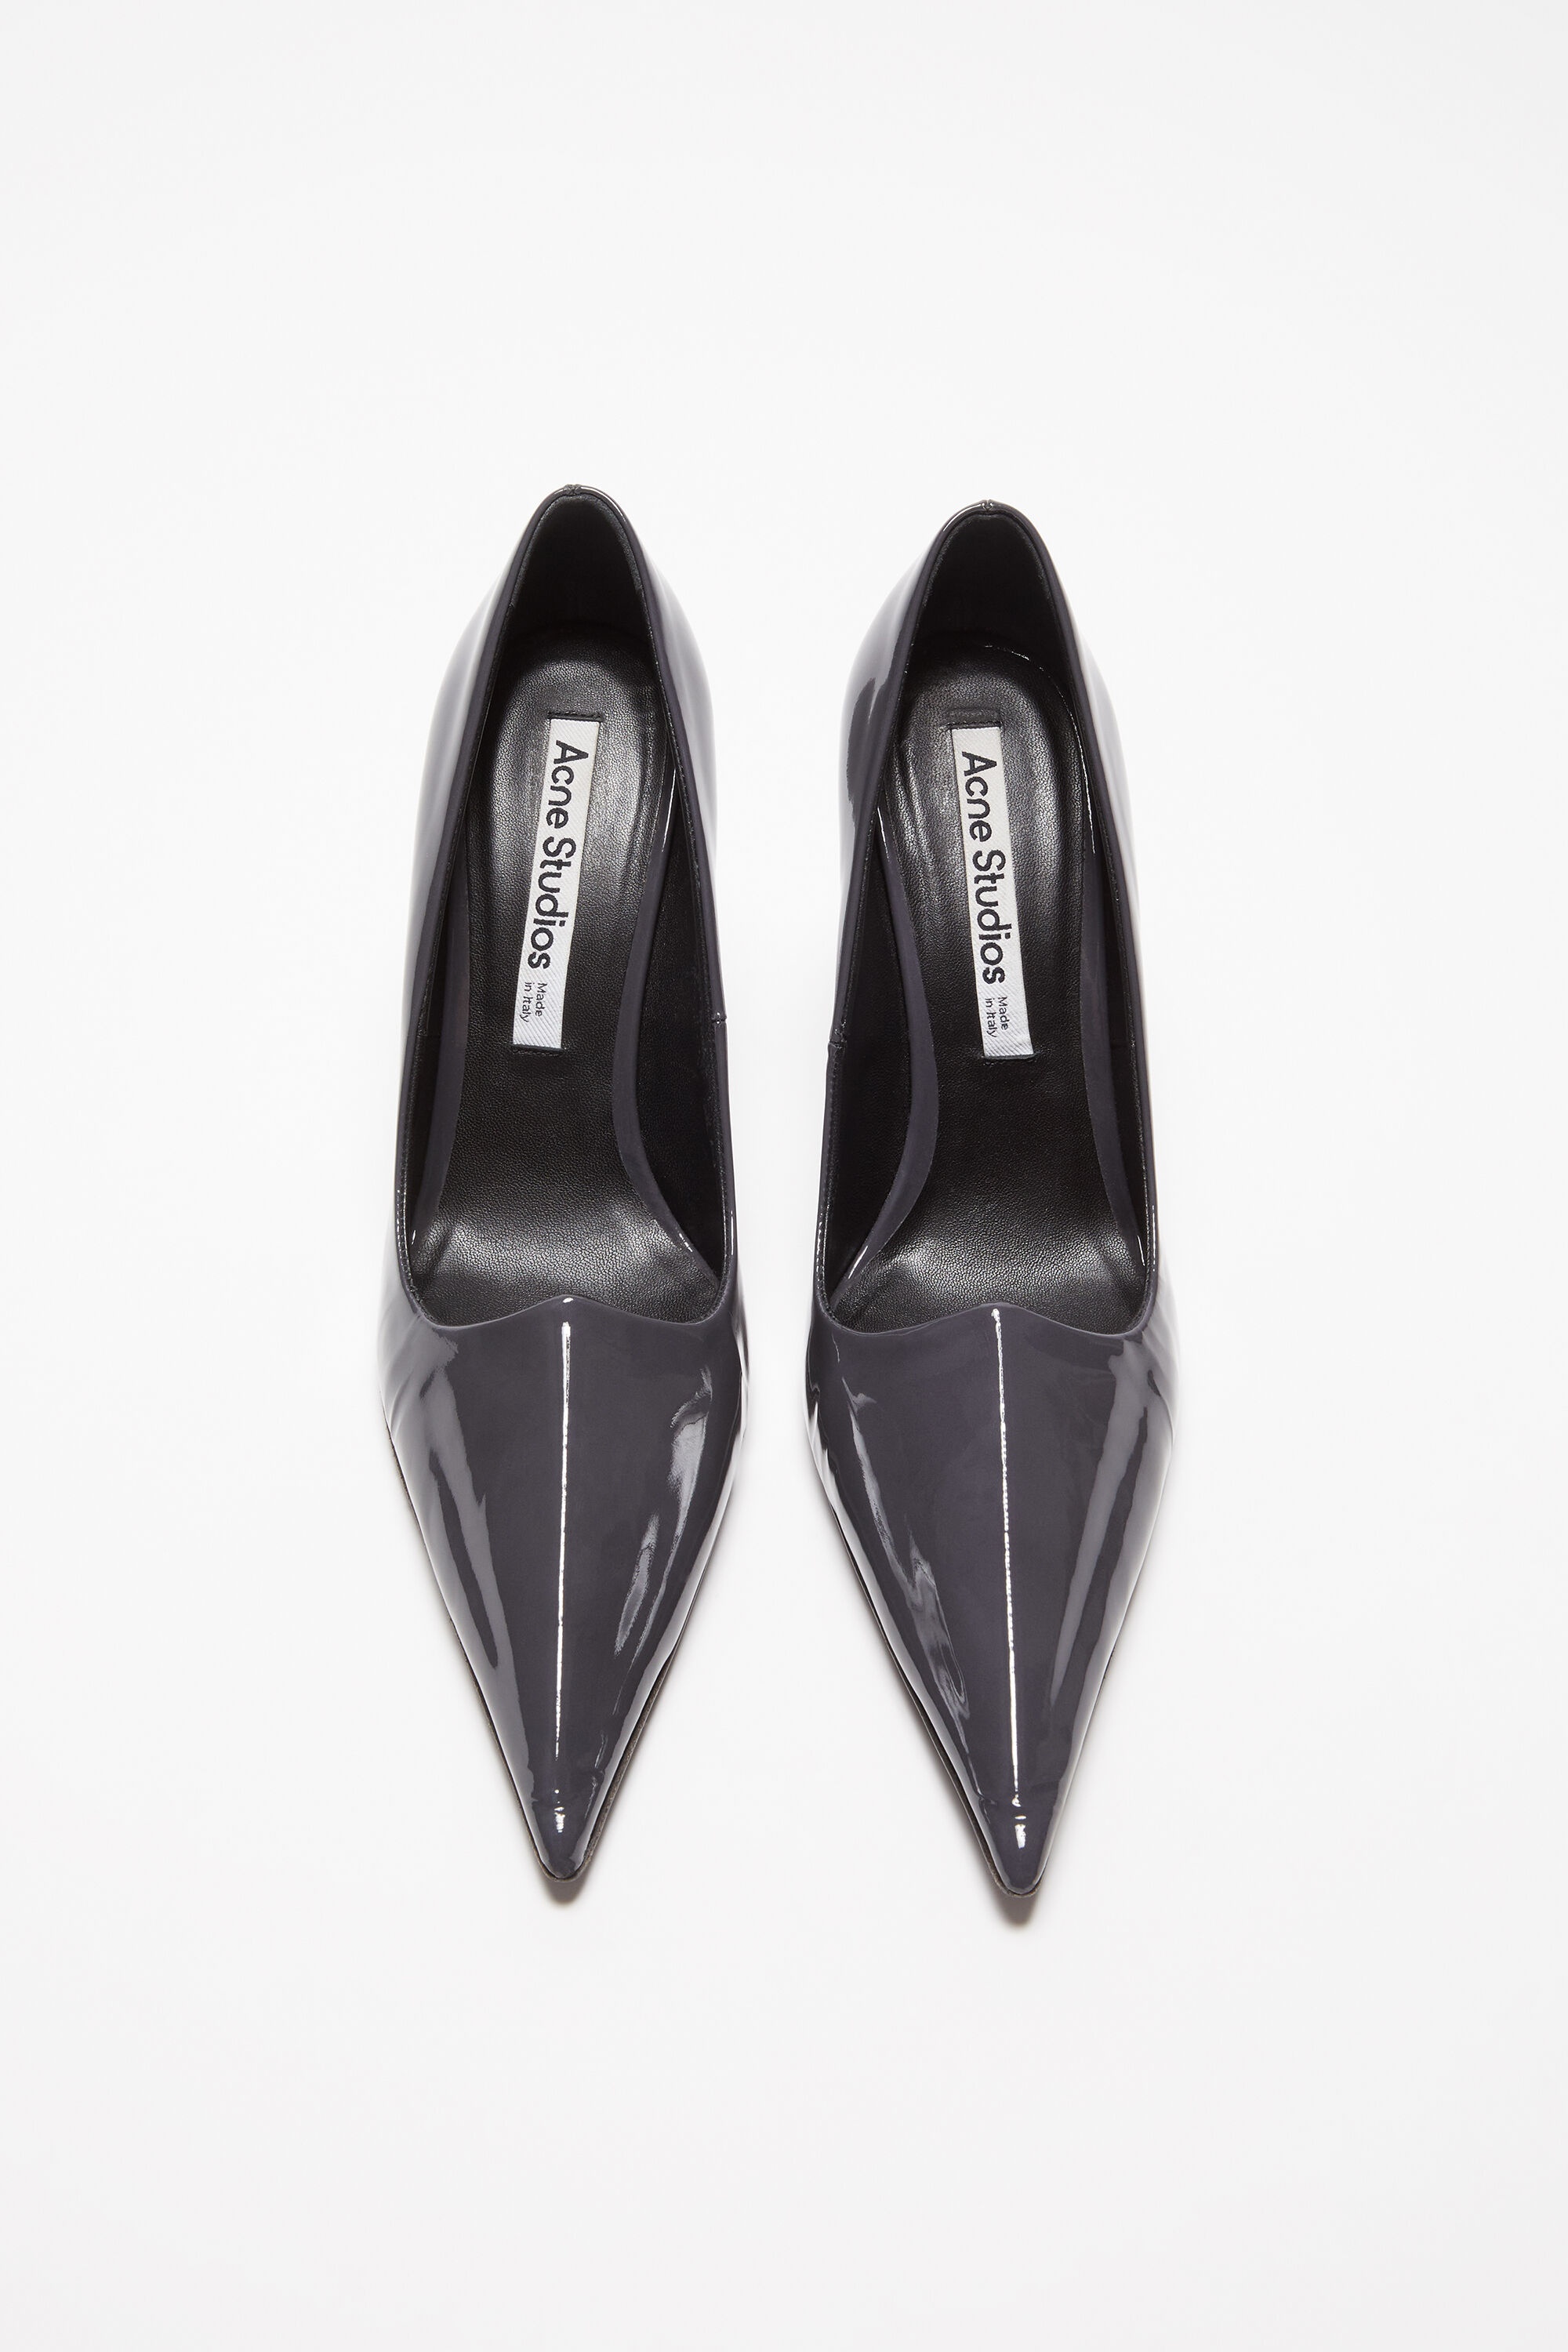 Leather heel pump - Anthracite grey - 2